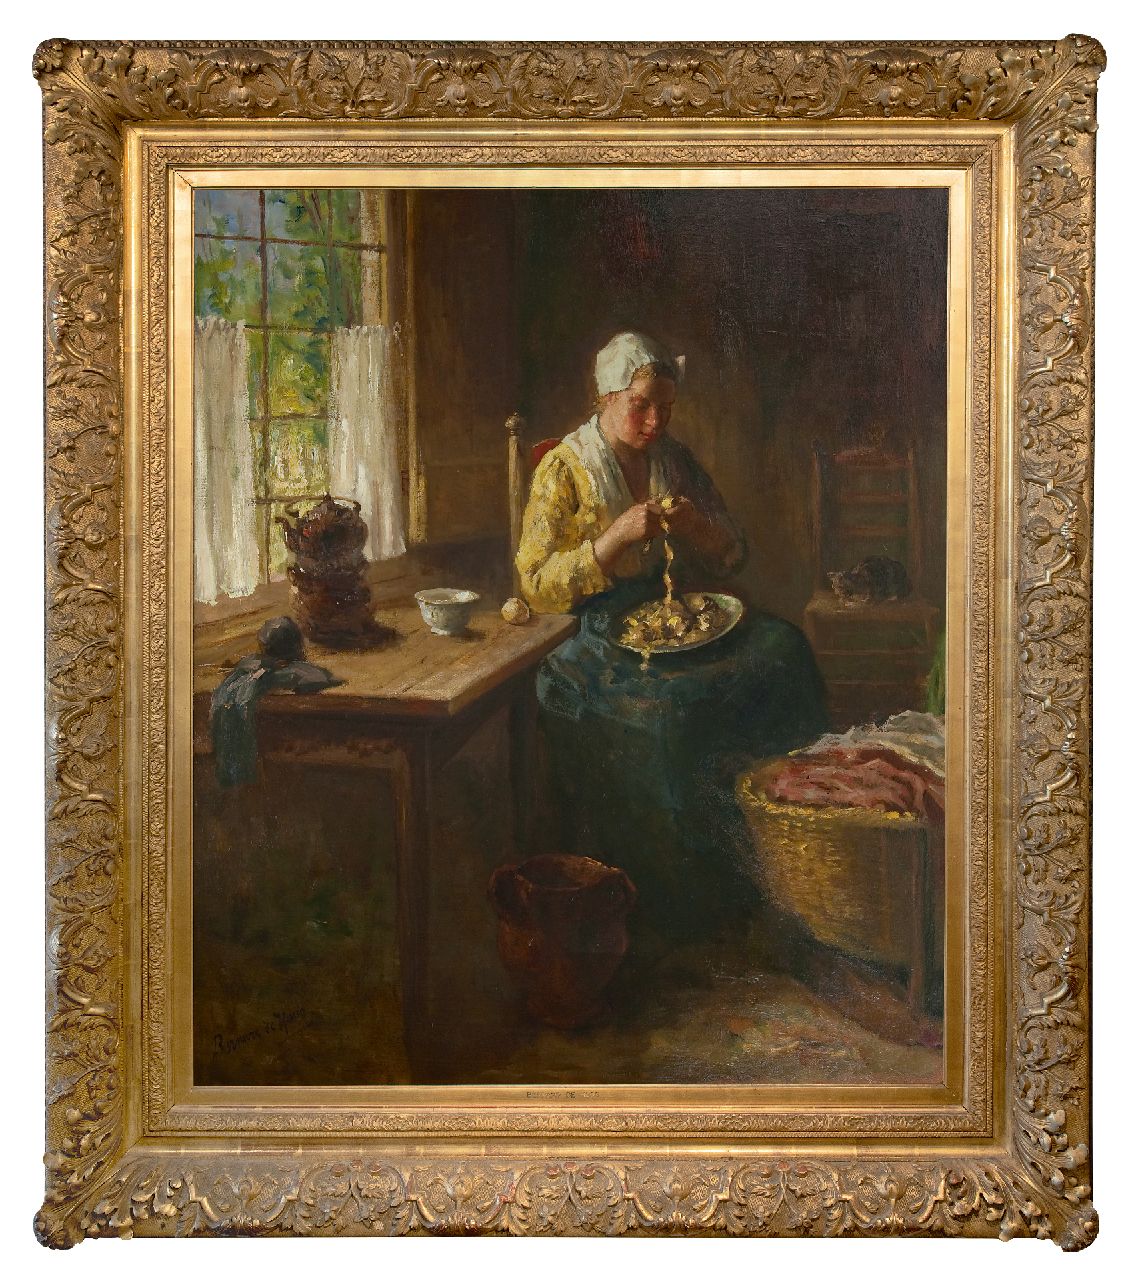 Hoog J.B. de | Johan 'Bernard' de Hoog | Paintings offered for sale | Peeling potatoes, oil on canvas 120.3 x 100.3 cm, signed l.l.